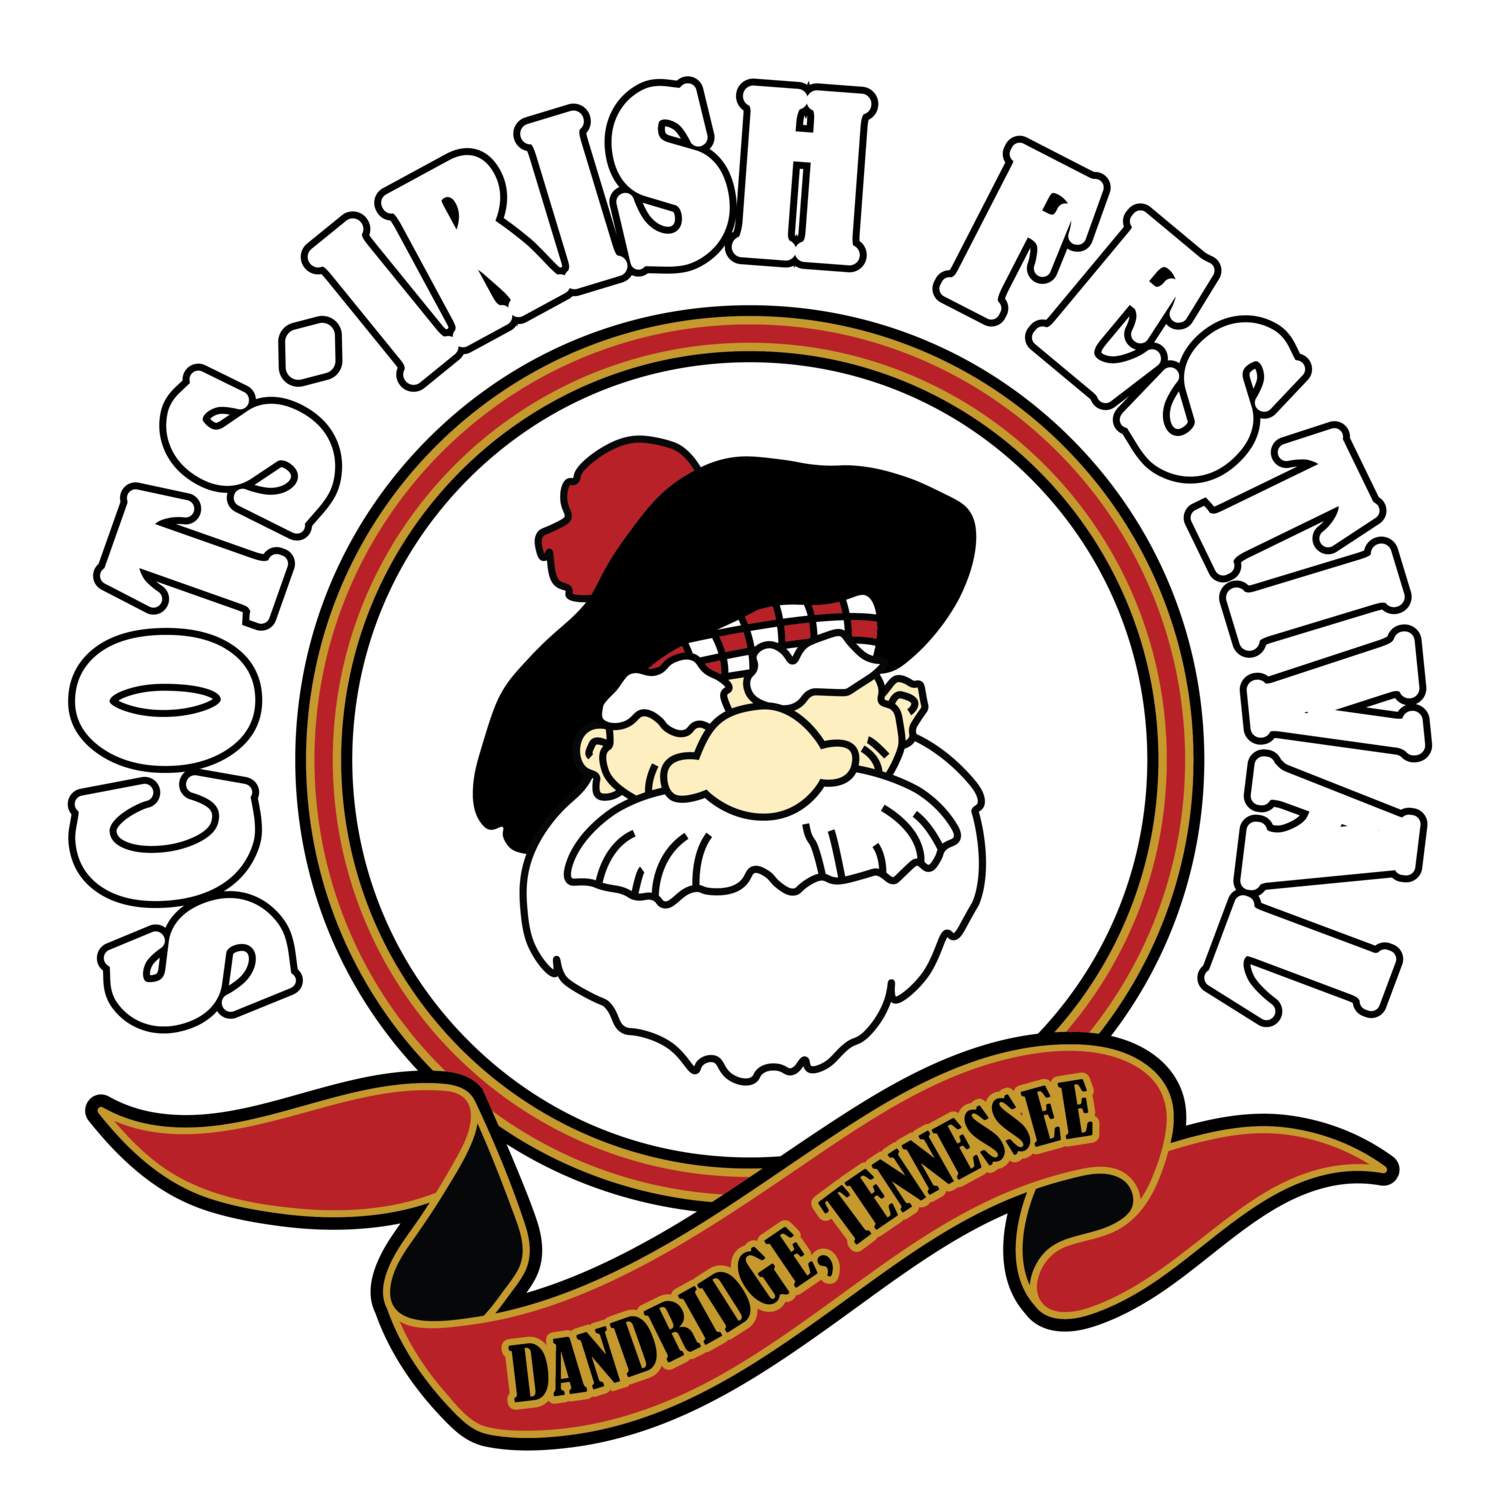 2018 Dandridge Scots-Irish Festival